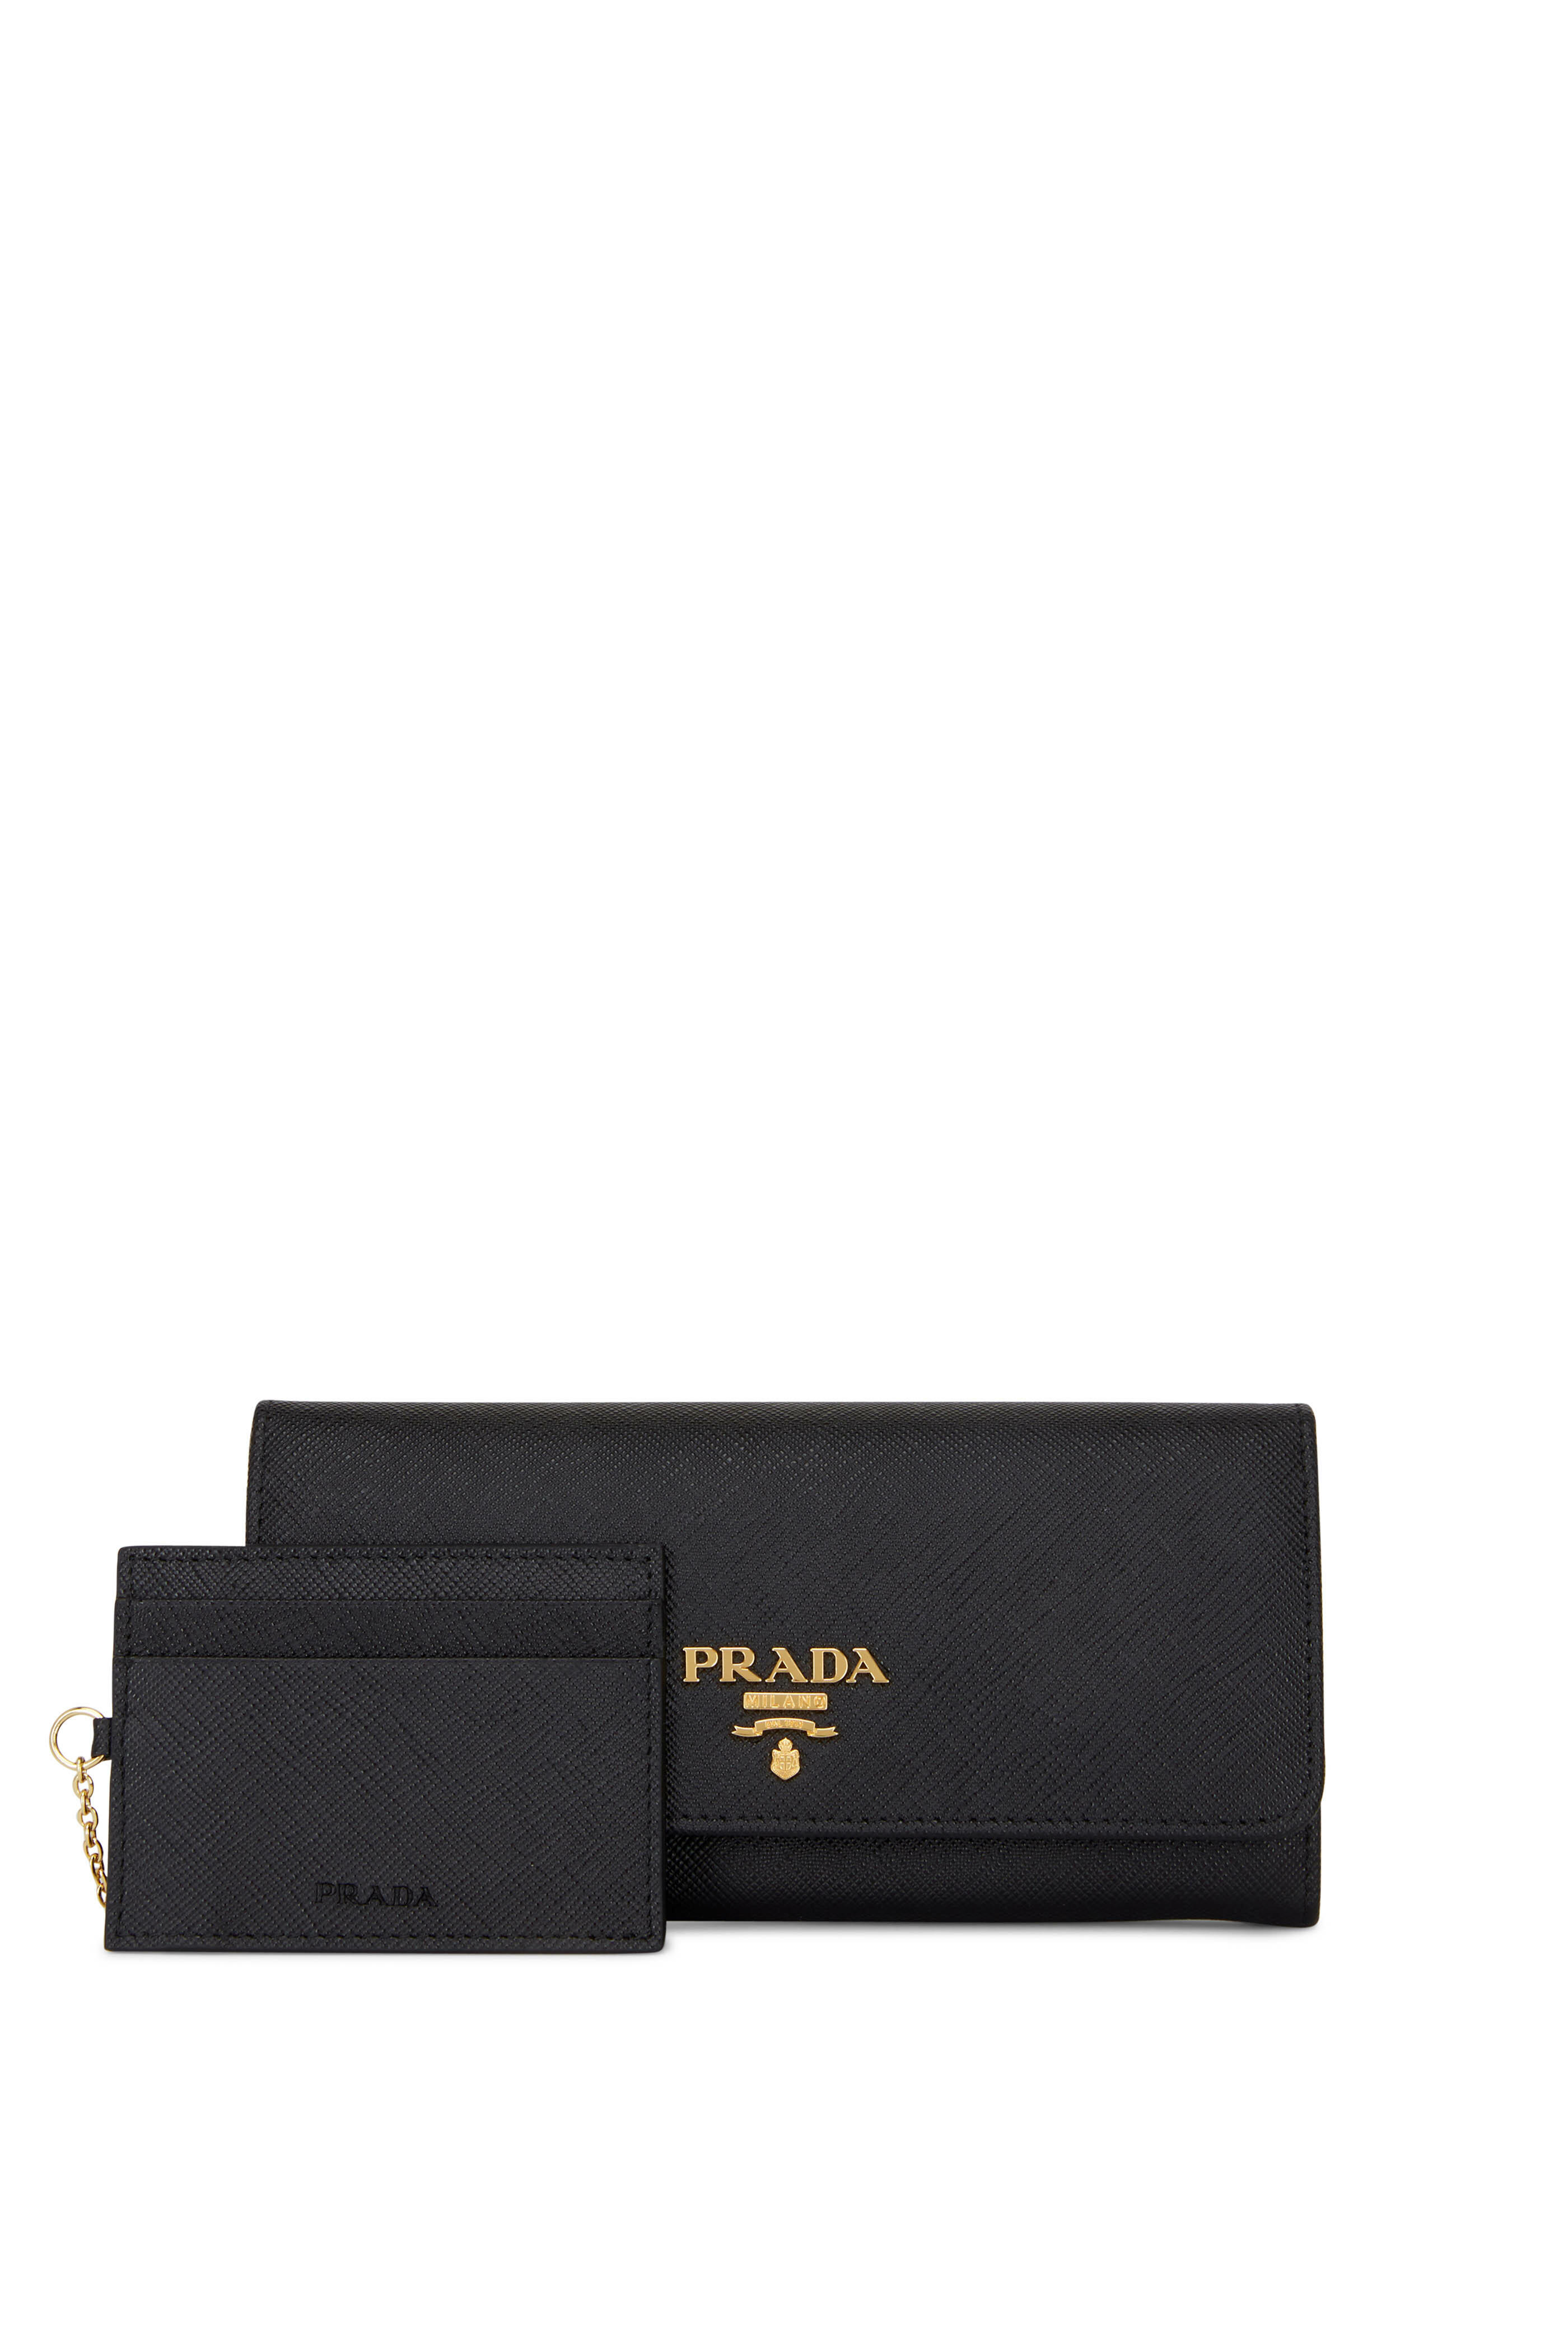 Prada, Bags, Prada Saffiano Leather Grey Double Snap Long Wallet